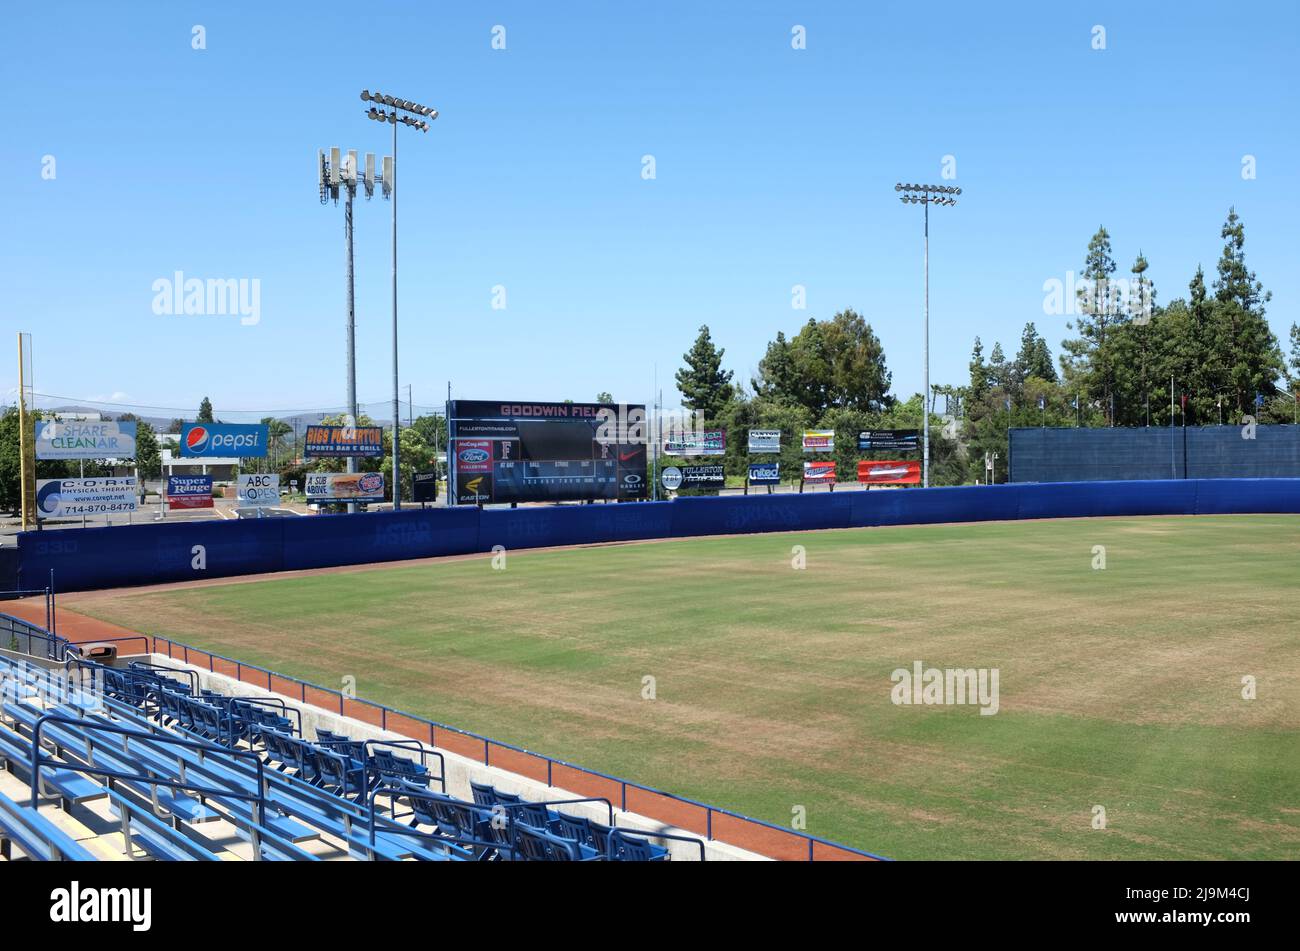 FULLERTON CALIFORNIA - 22. MAI 2020: Goodwin Field Scoreboard, auf dem Campus der California State University Fullerton, CSUF. Stockfoto